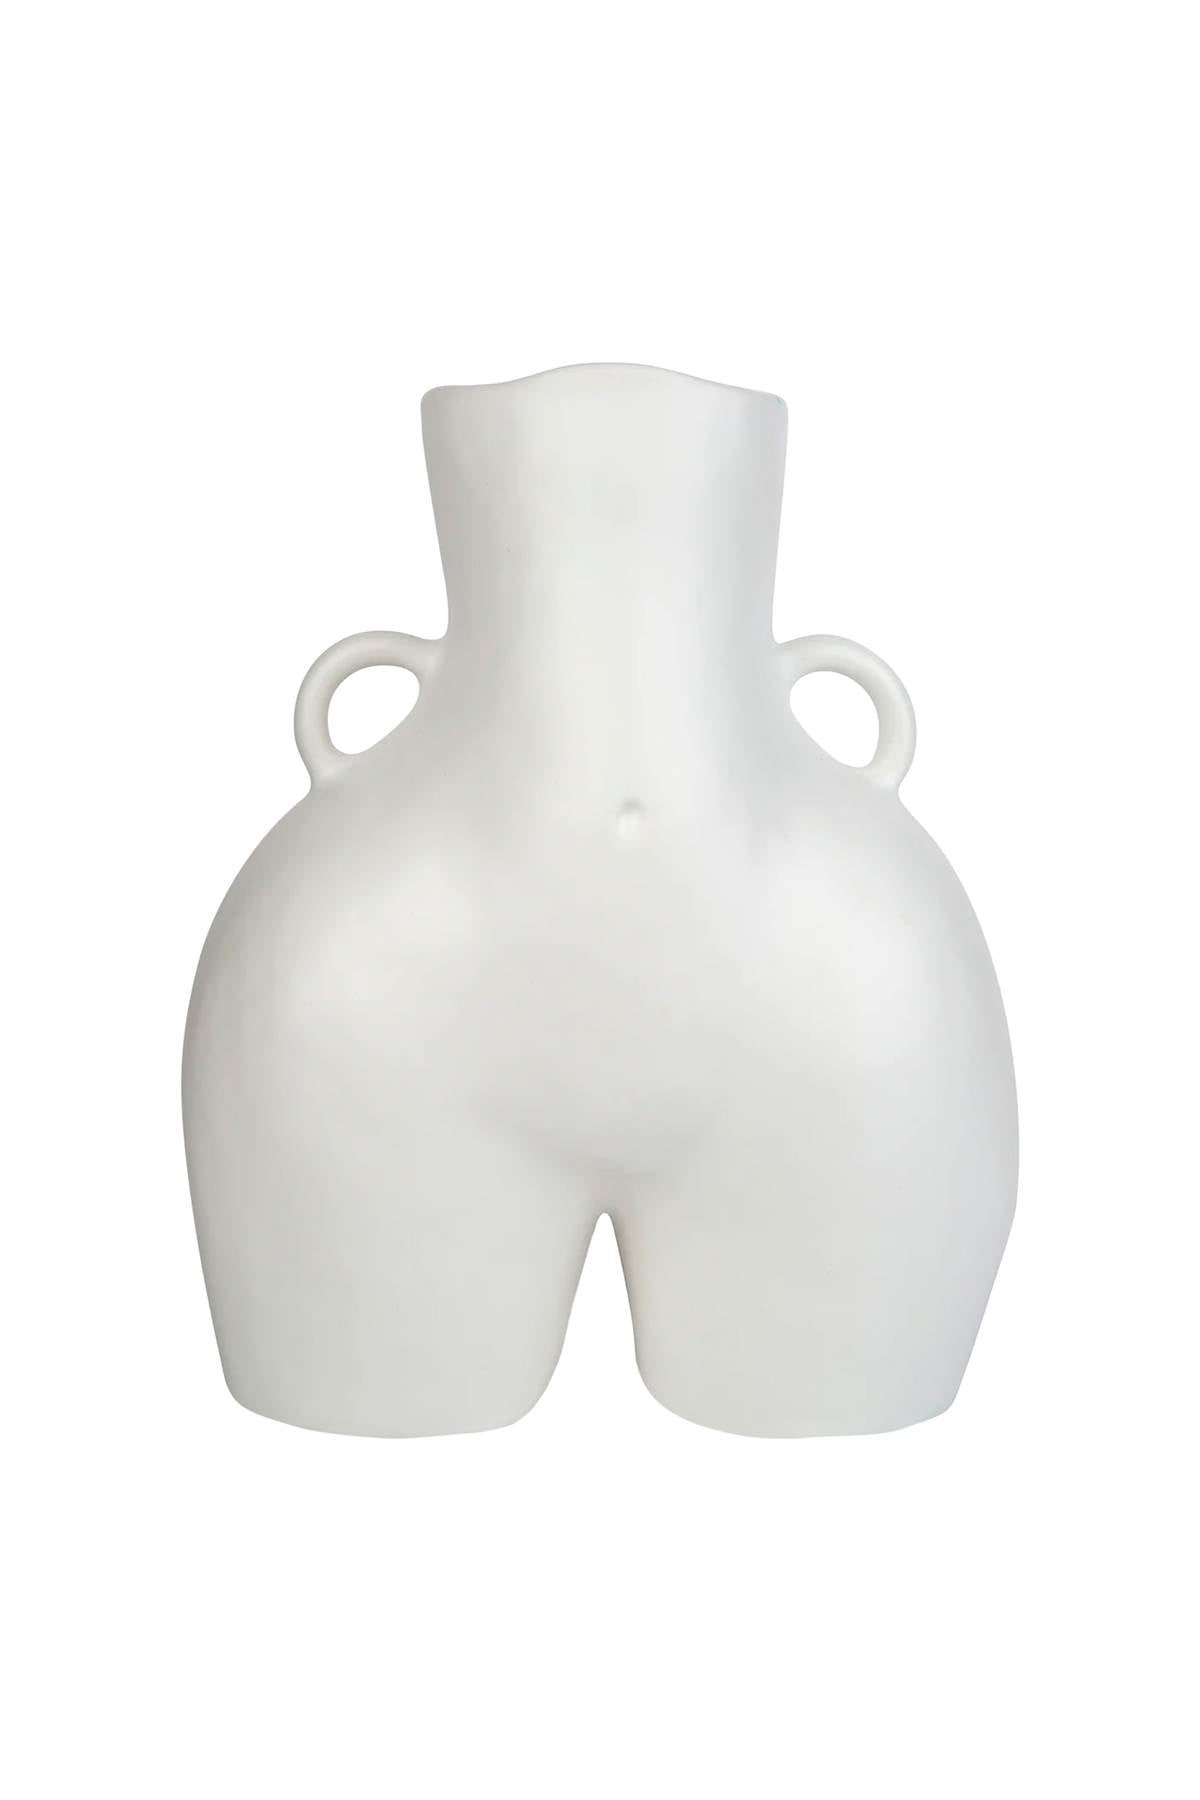 Anissa kermiche 'love handles' vase-0